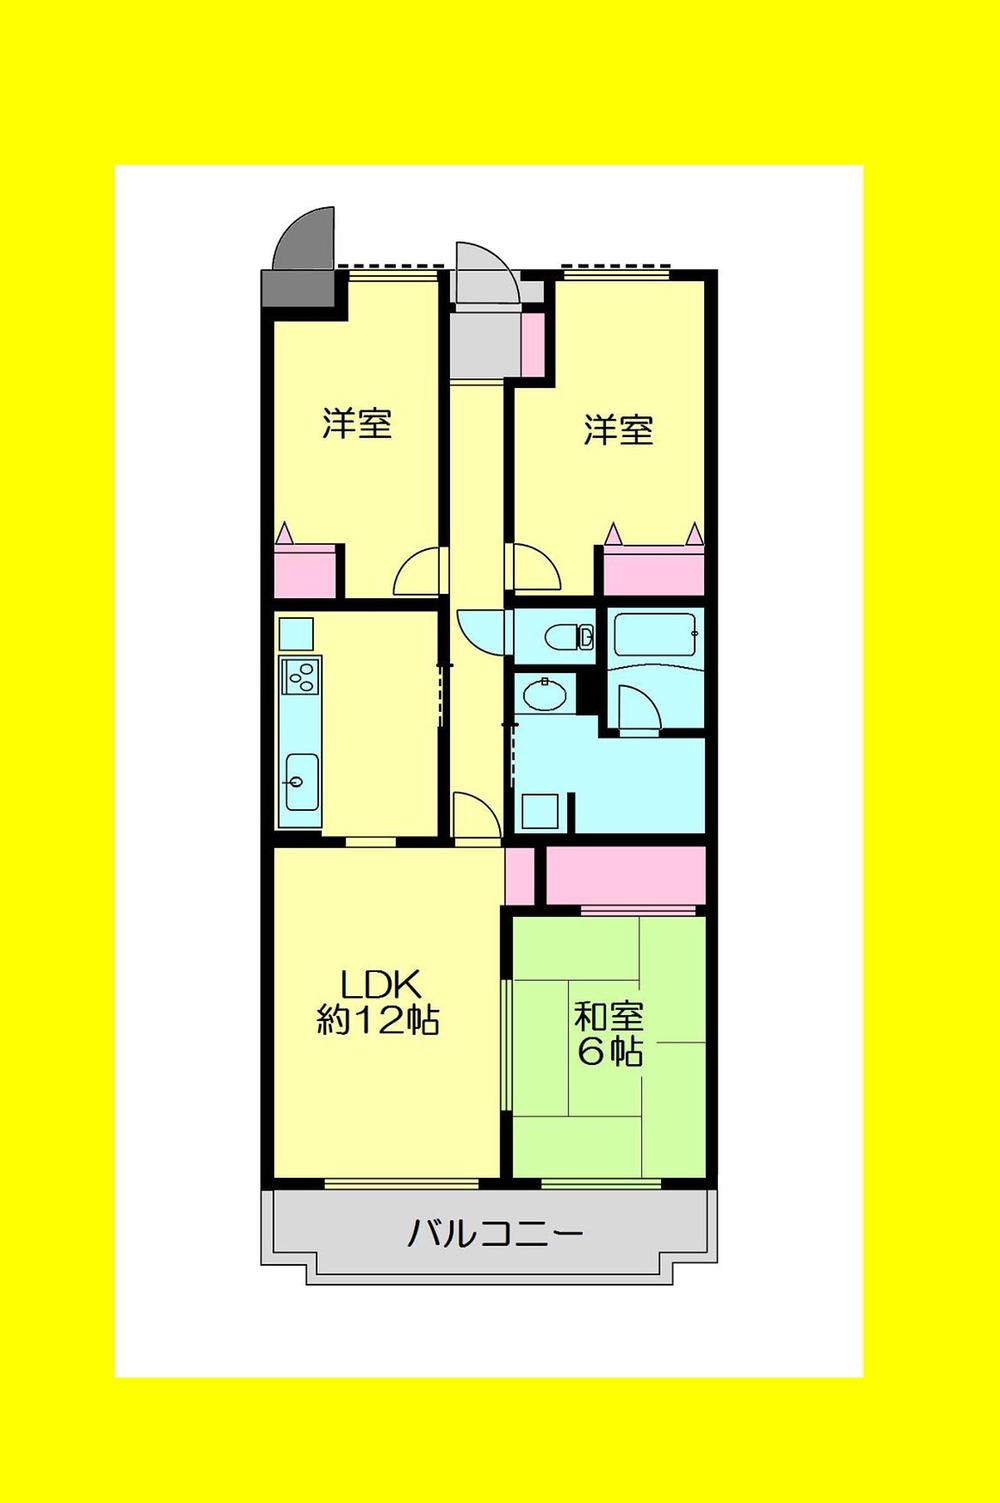 Floor plan. 3LDK, Price 6 million yen, Occupied area 70.44 sq m